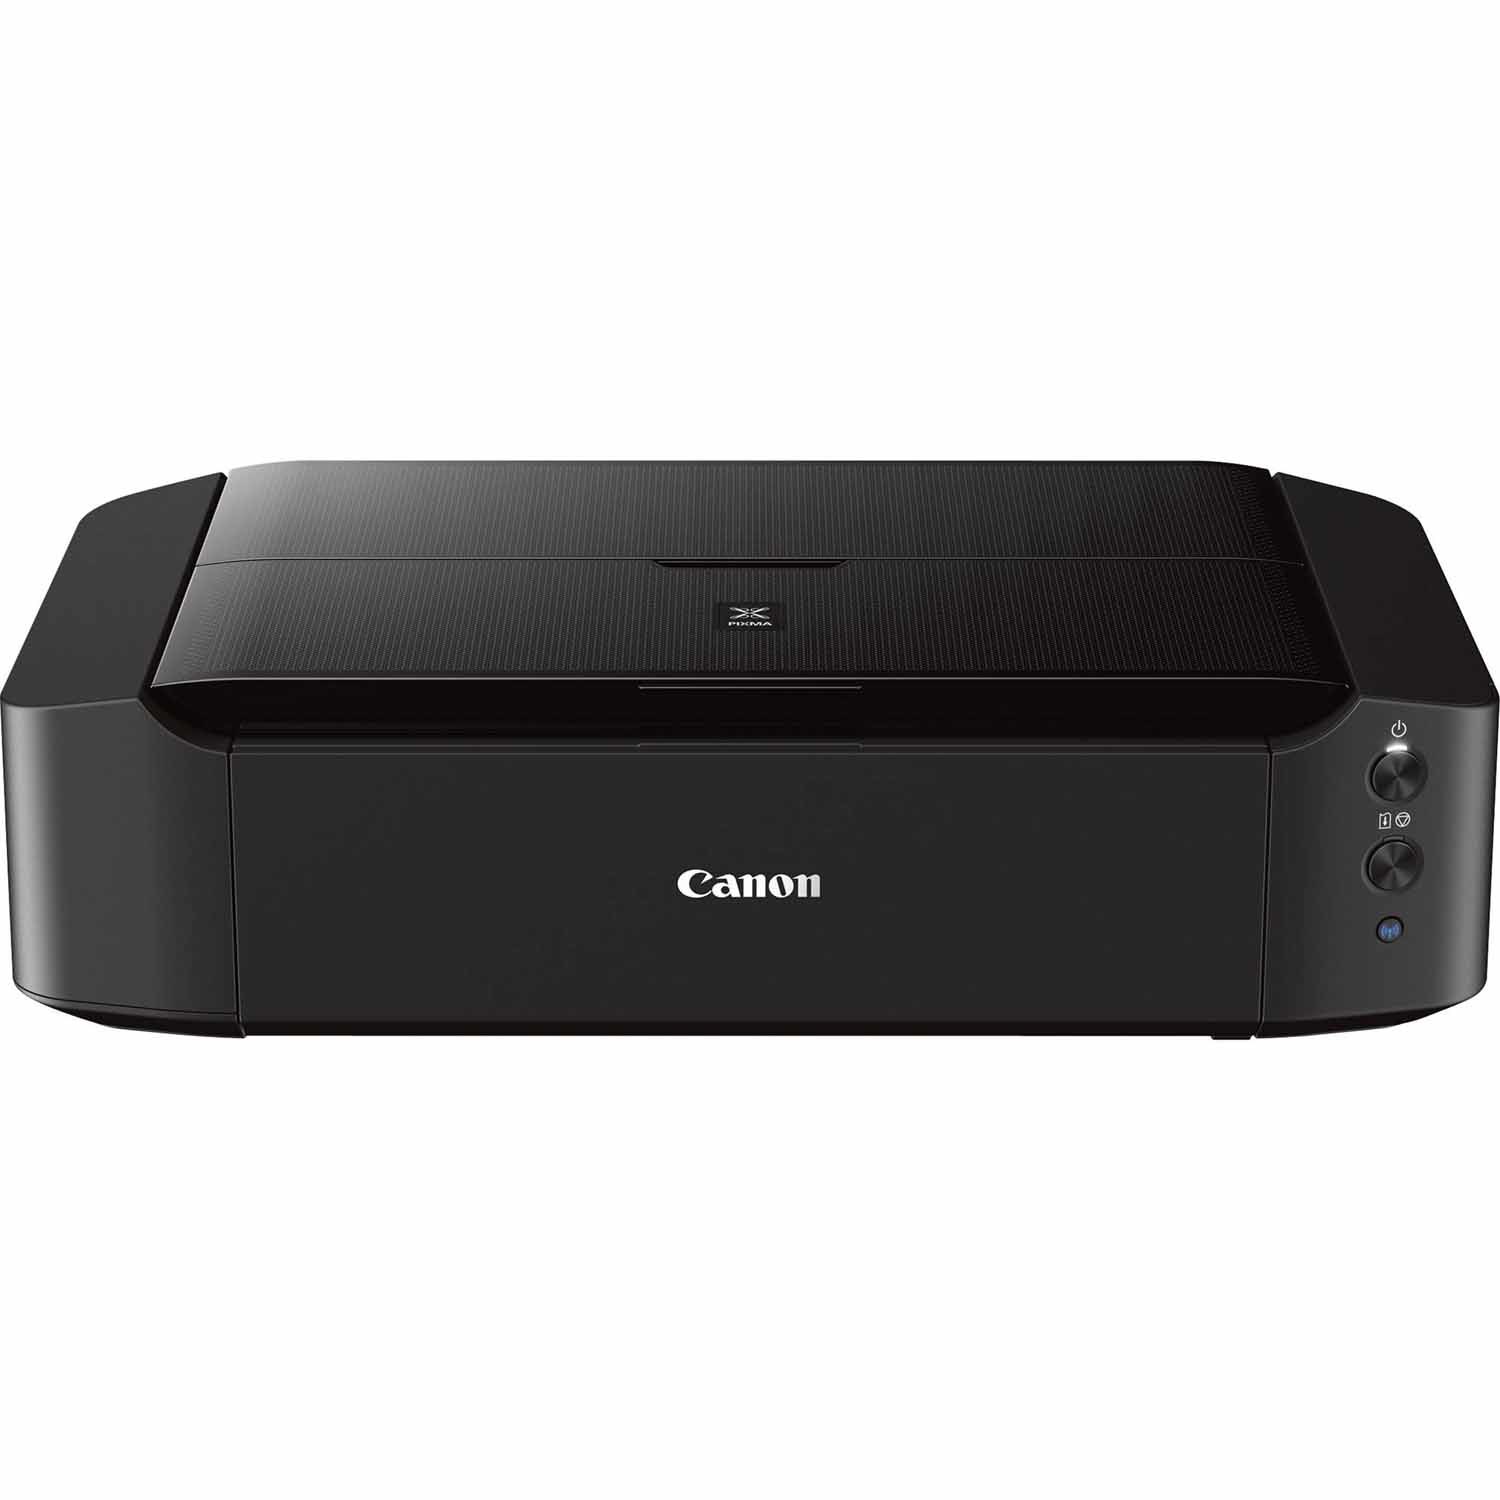 Canon Pixma iP8720 Wireless Desktop Inkjet Printer - Black - image 1 of 6